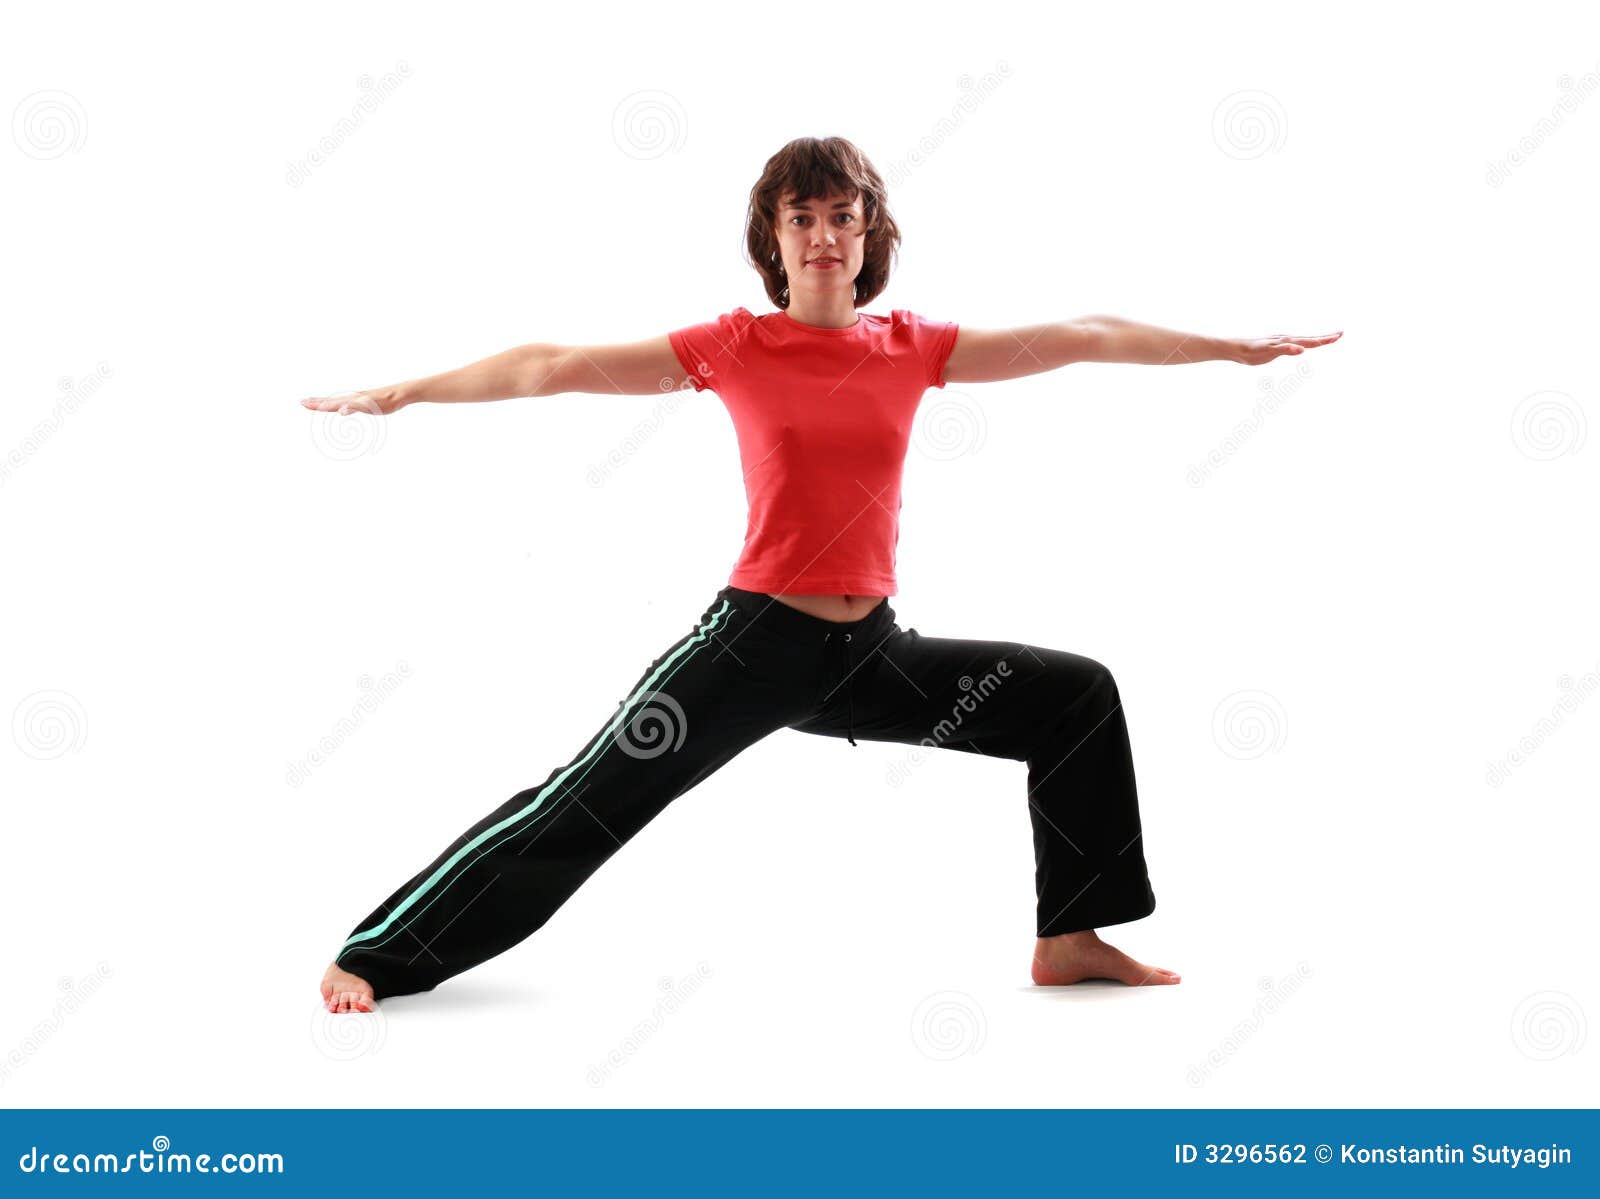 216 Poses Single Yoga Stock Photos - Free & Royalty-Free Stock Photos from  Dreamstime